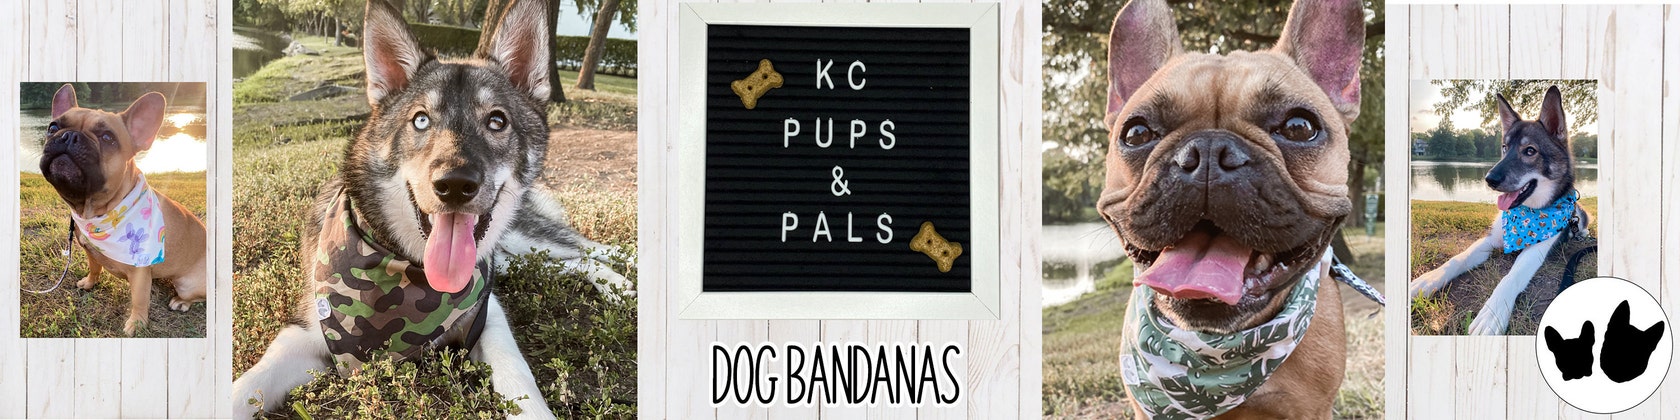 Kansas City Royals Dog Jerseys, Royals Pet Carriers, Harness, Bandanas,  Leashes